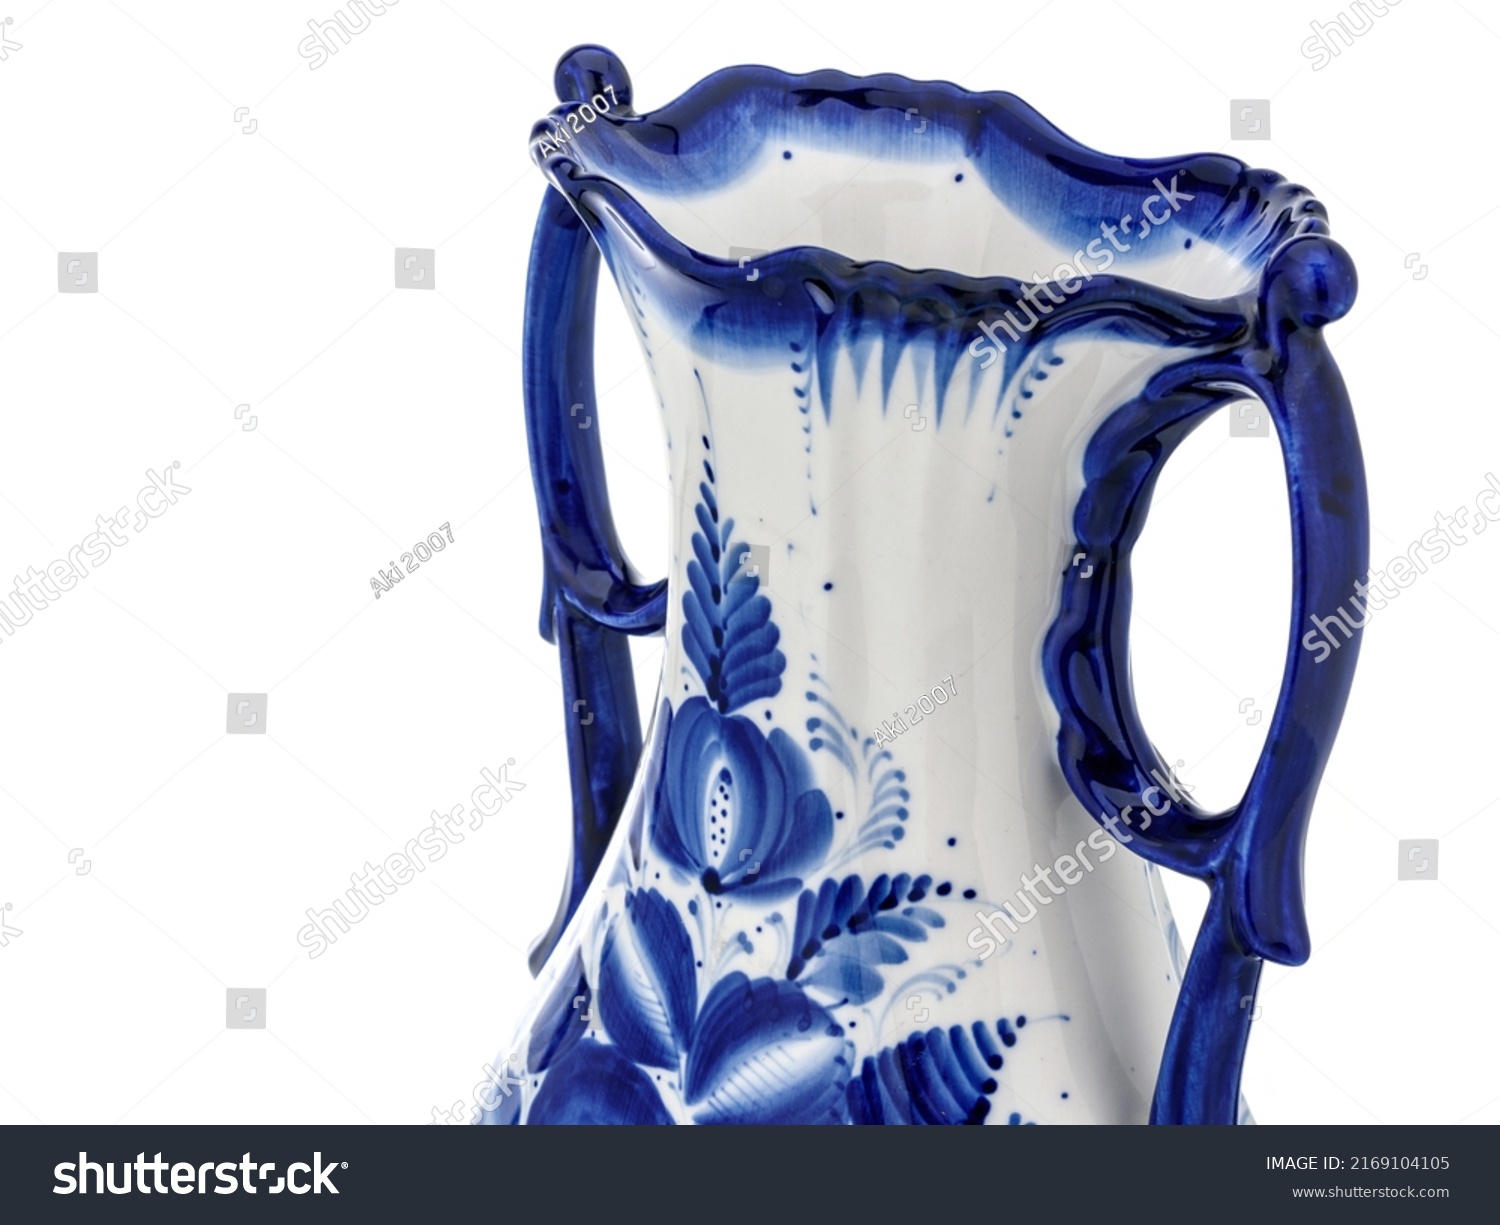 Cobalt Blue Porcelain Ceramic Vase Isolated on white. Traditional folk painting with pattern. Decor for interior design of premises, use for flower #2169104105